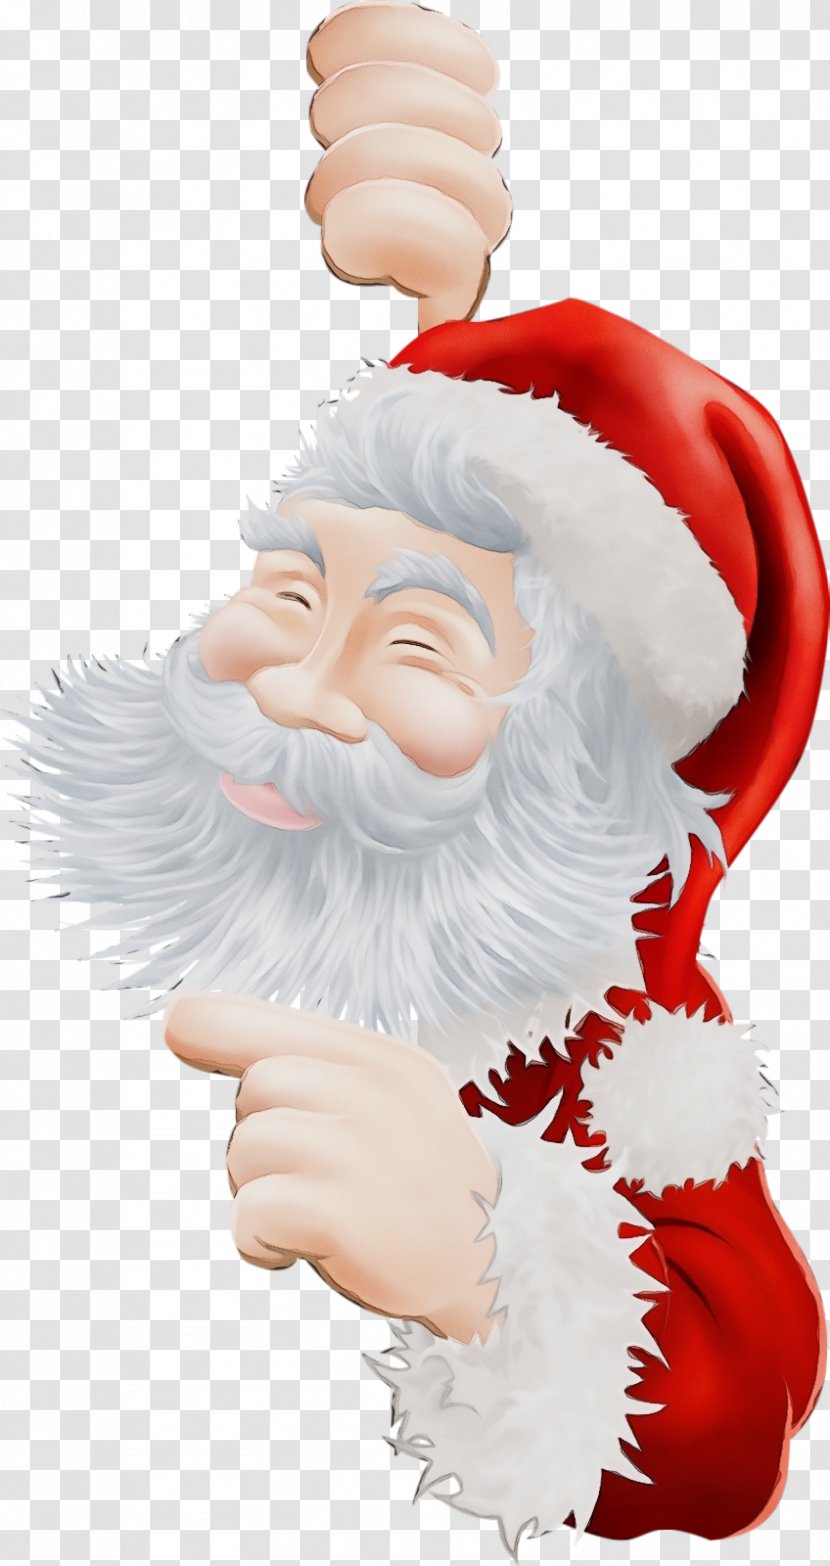 Santa Claus - Finger - Thumb Gesture Transparent PNG